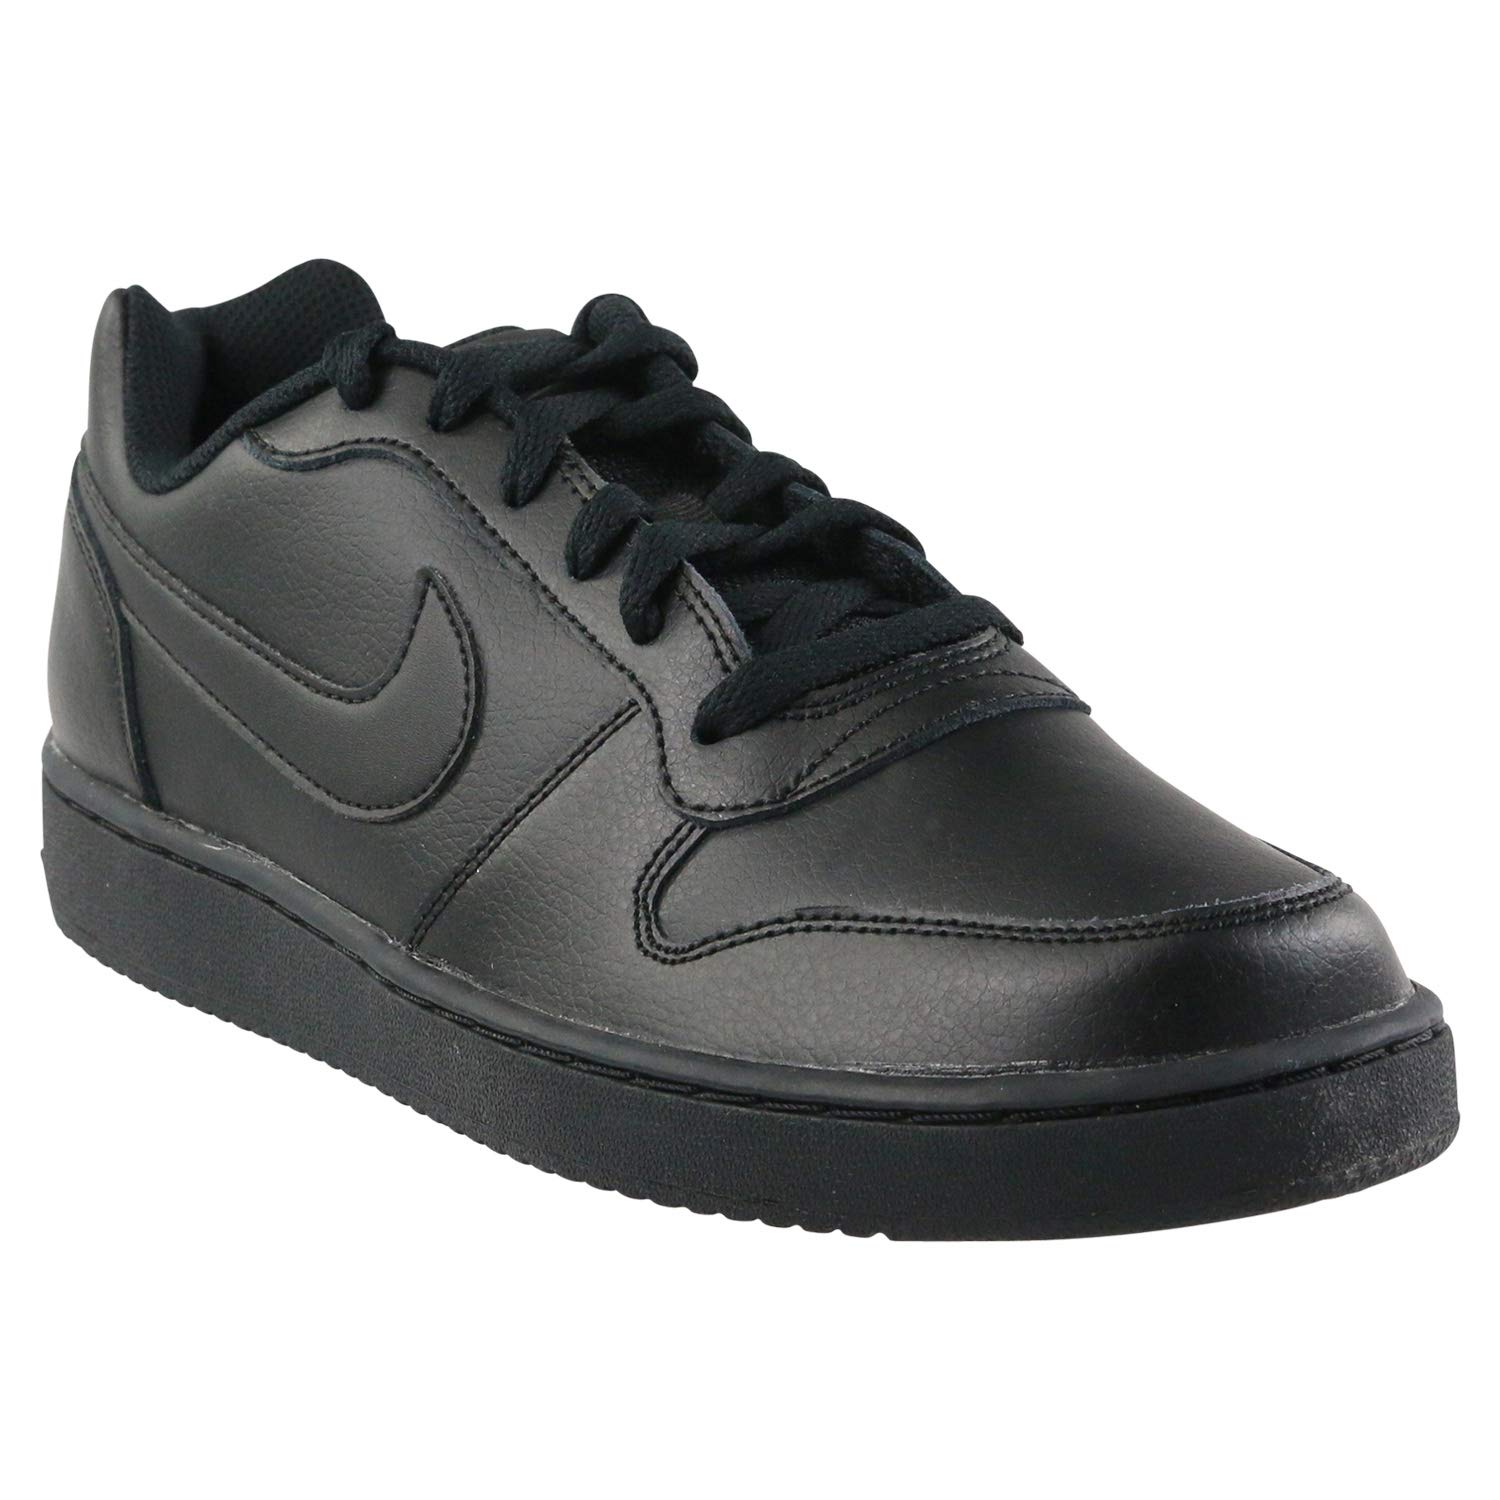 Nike Men's Ebernon Low Basketball Shoe